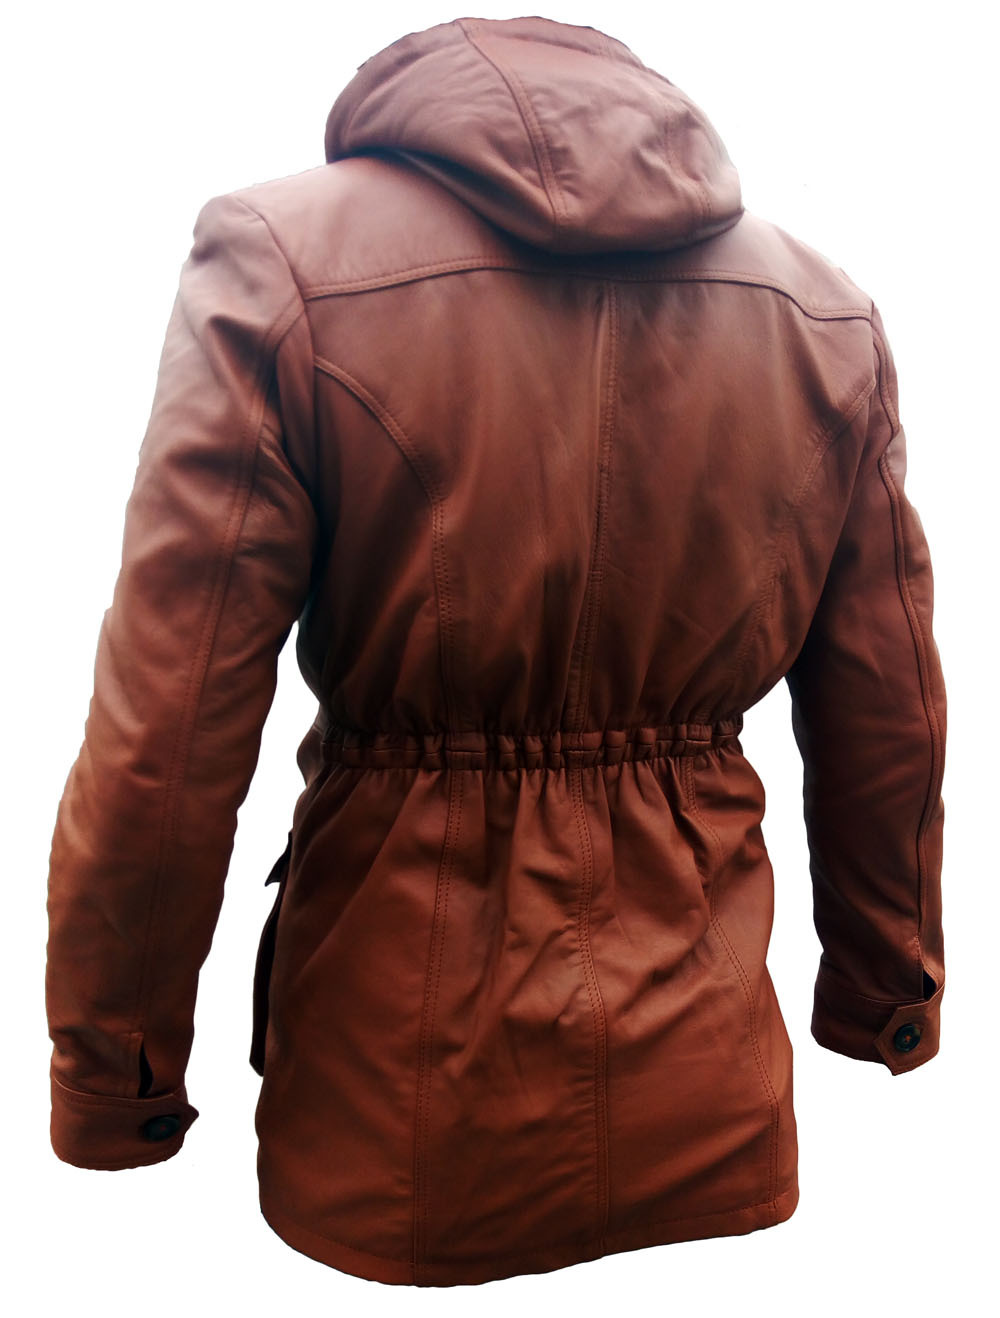 Long hooded leather jacket